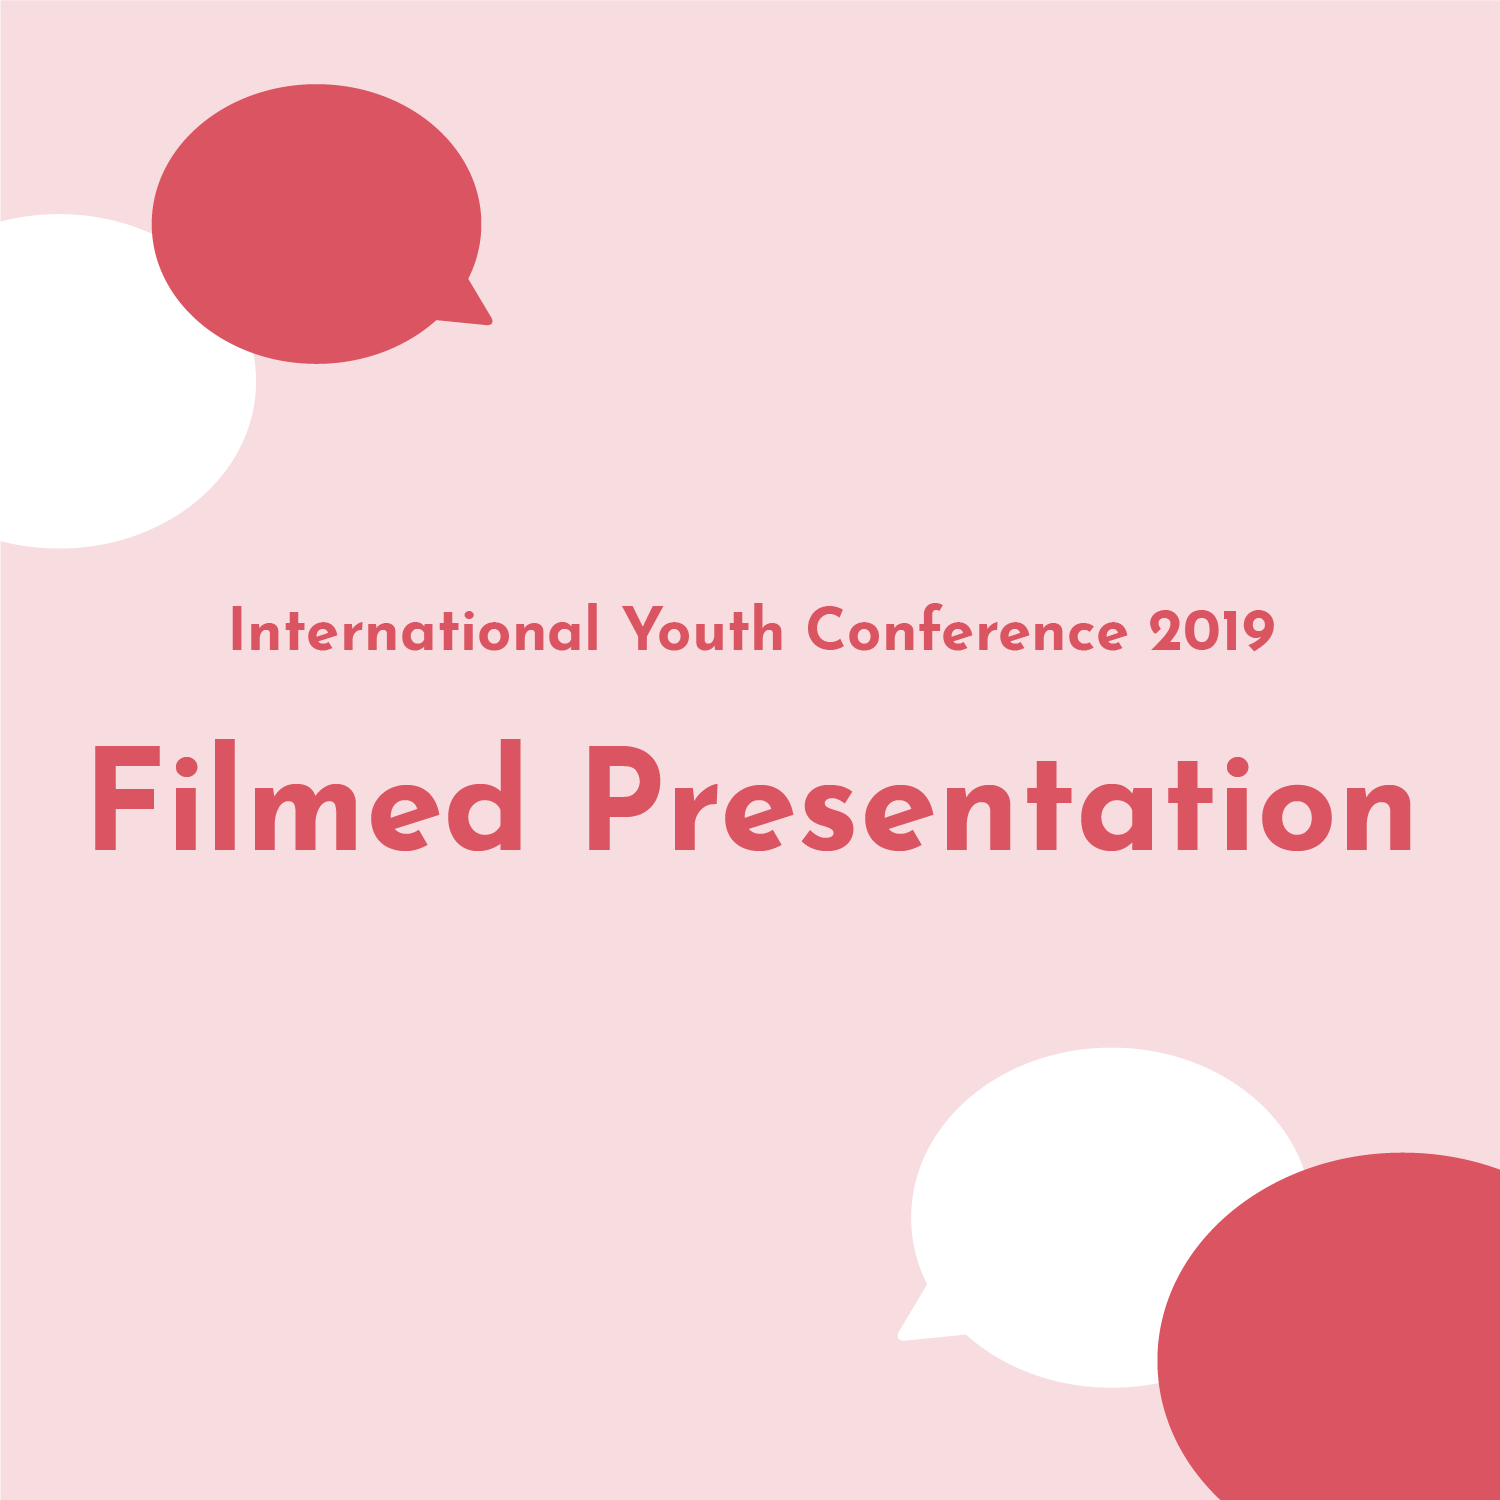 IYC 2019 Filmed Presentation